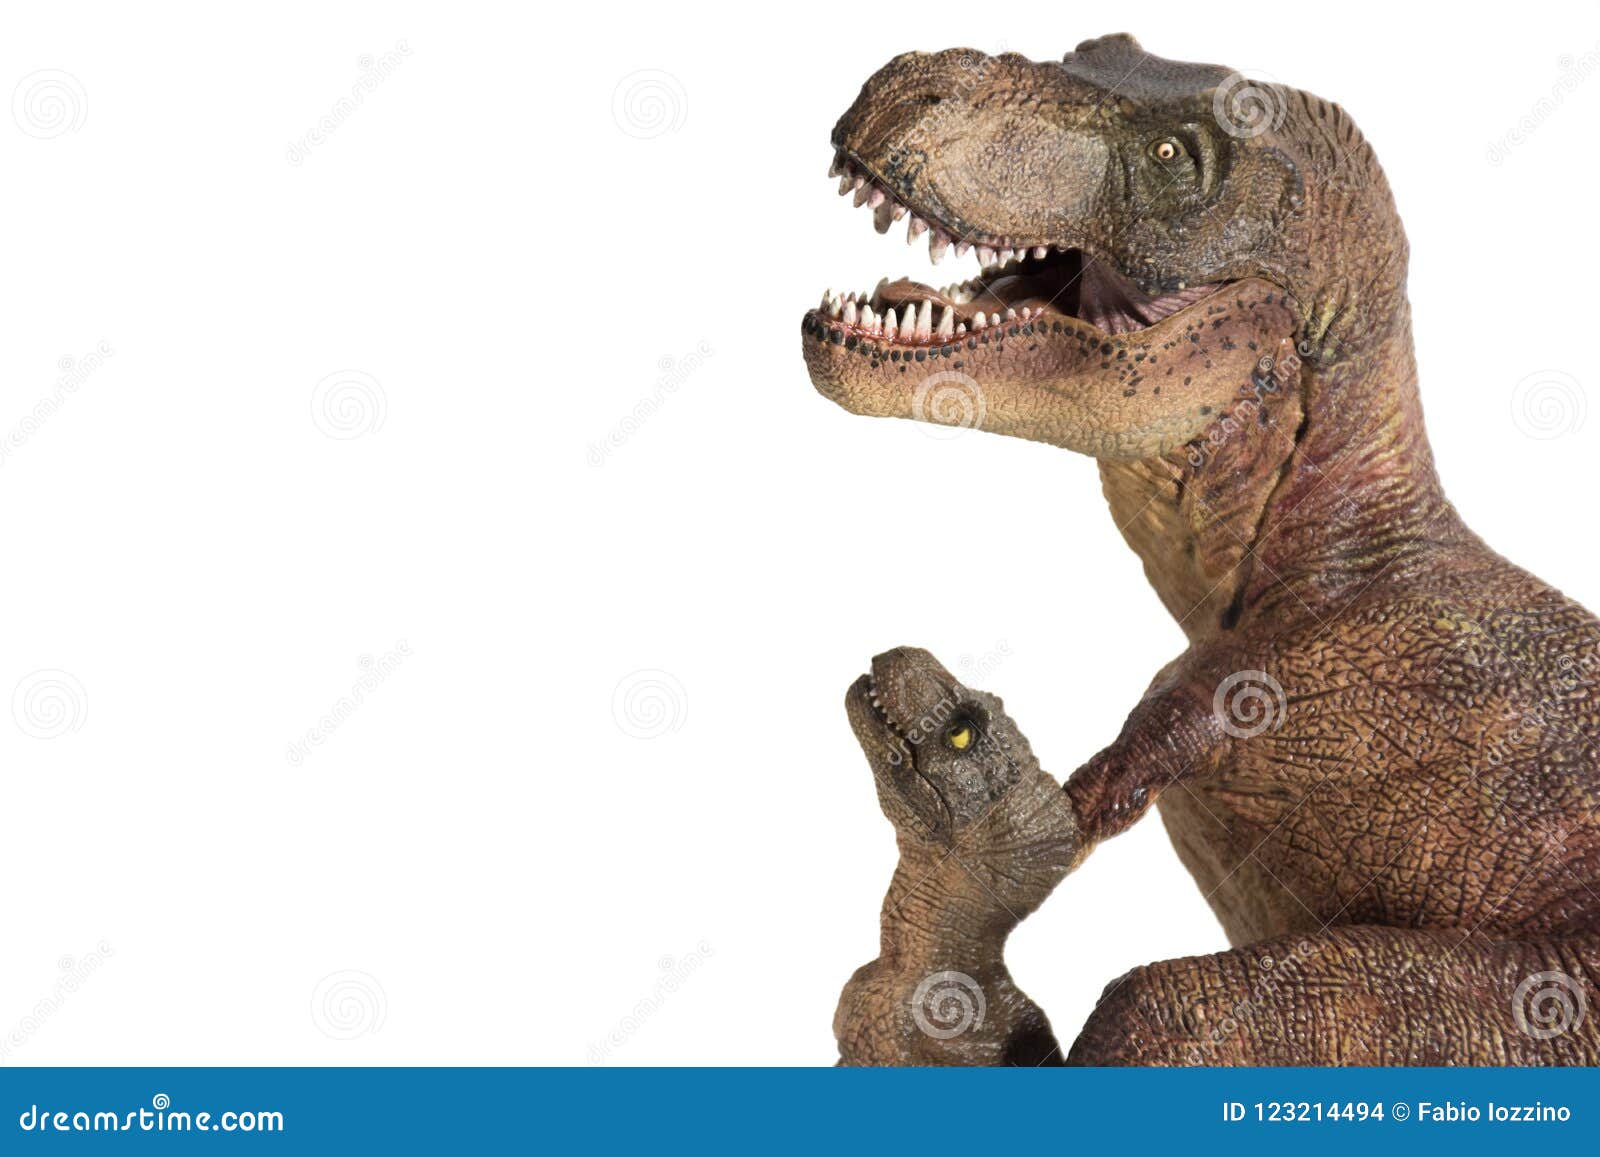 tyrannosaurus rex with baby t-rex on white background